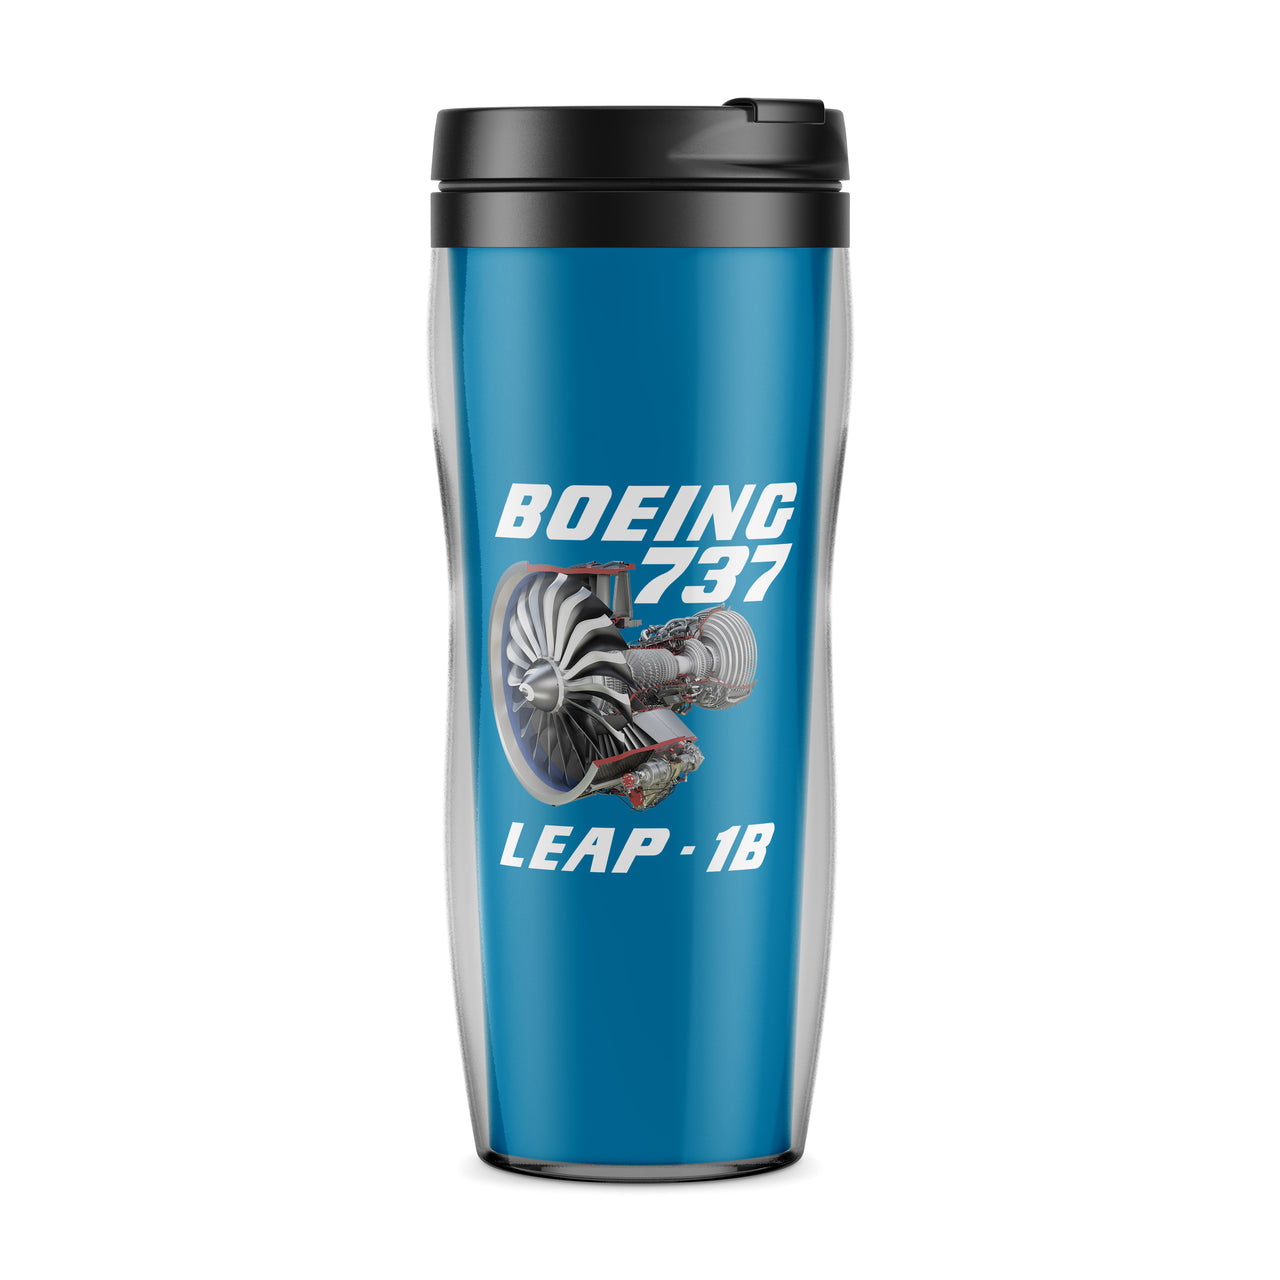 Boeing 737 & Leap 1B Designed Travel Mugs